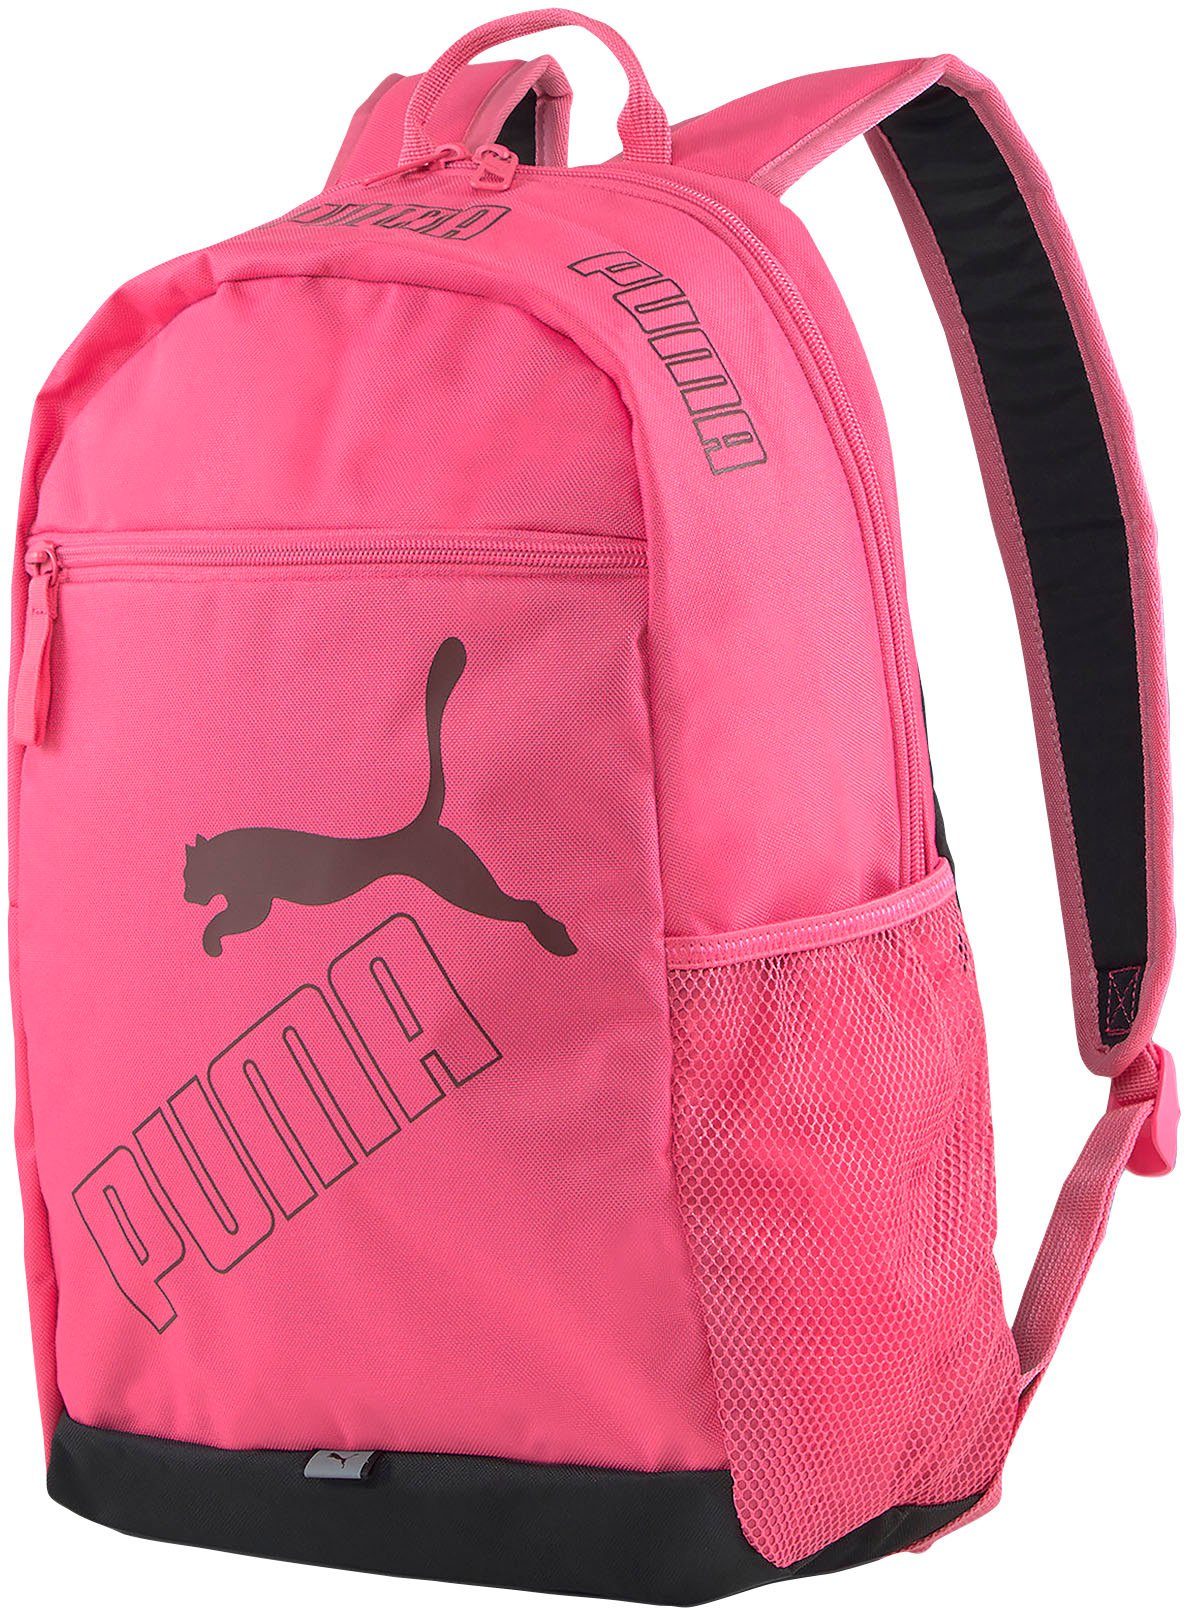 PUMA Sportrucksack »PUMA Phase Backpack II« kaufen | OTTO